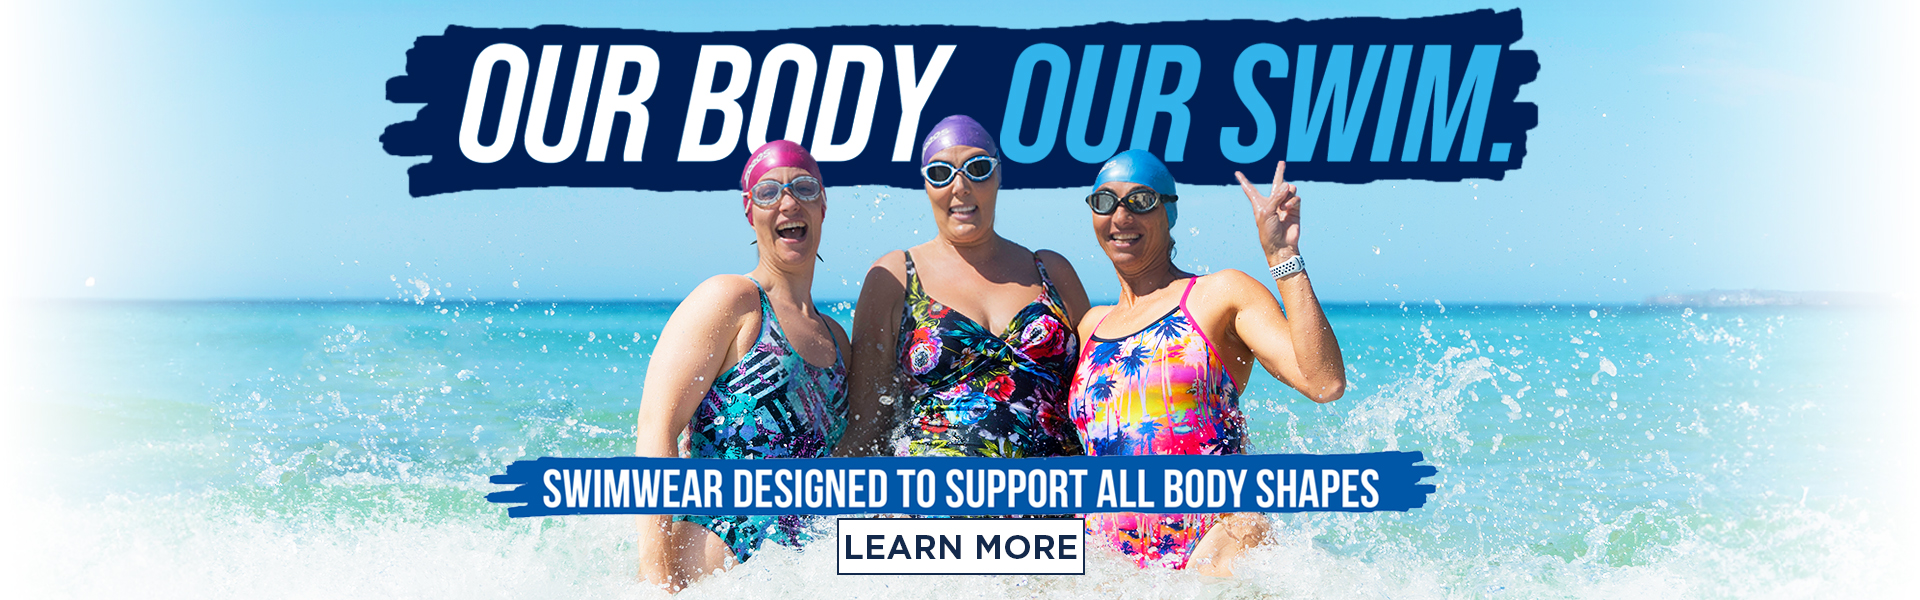 Our Body Our Swim